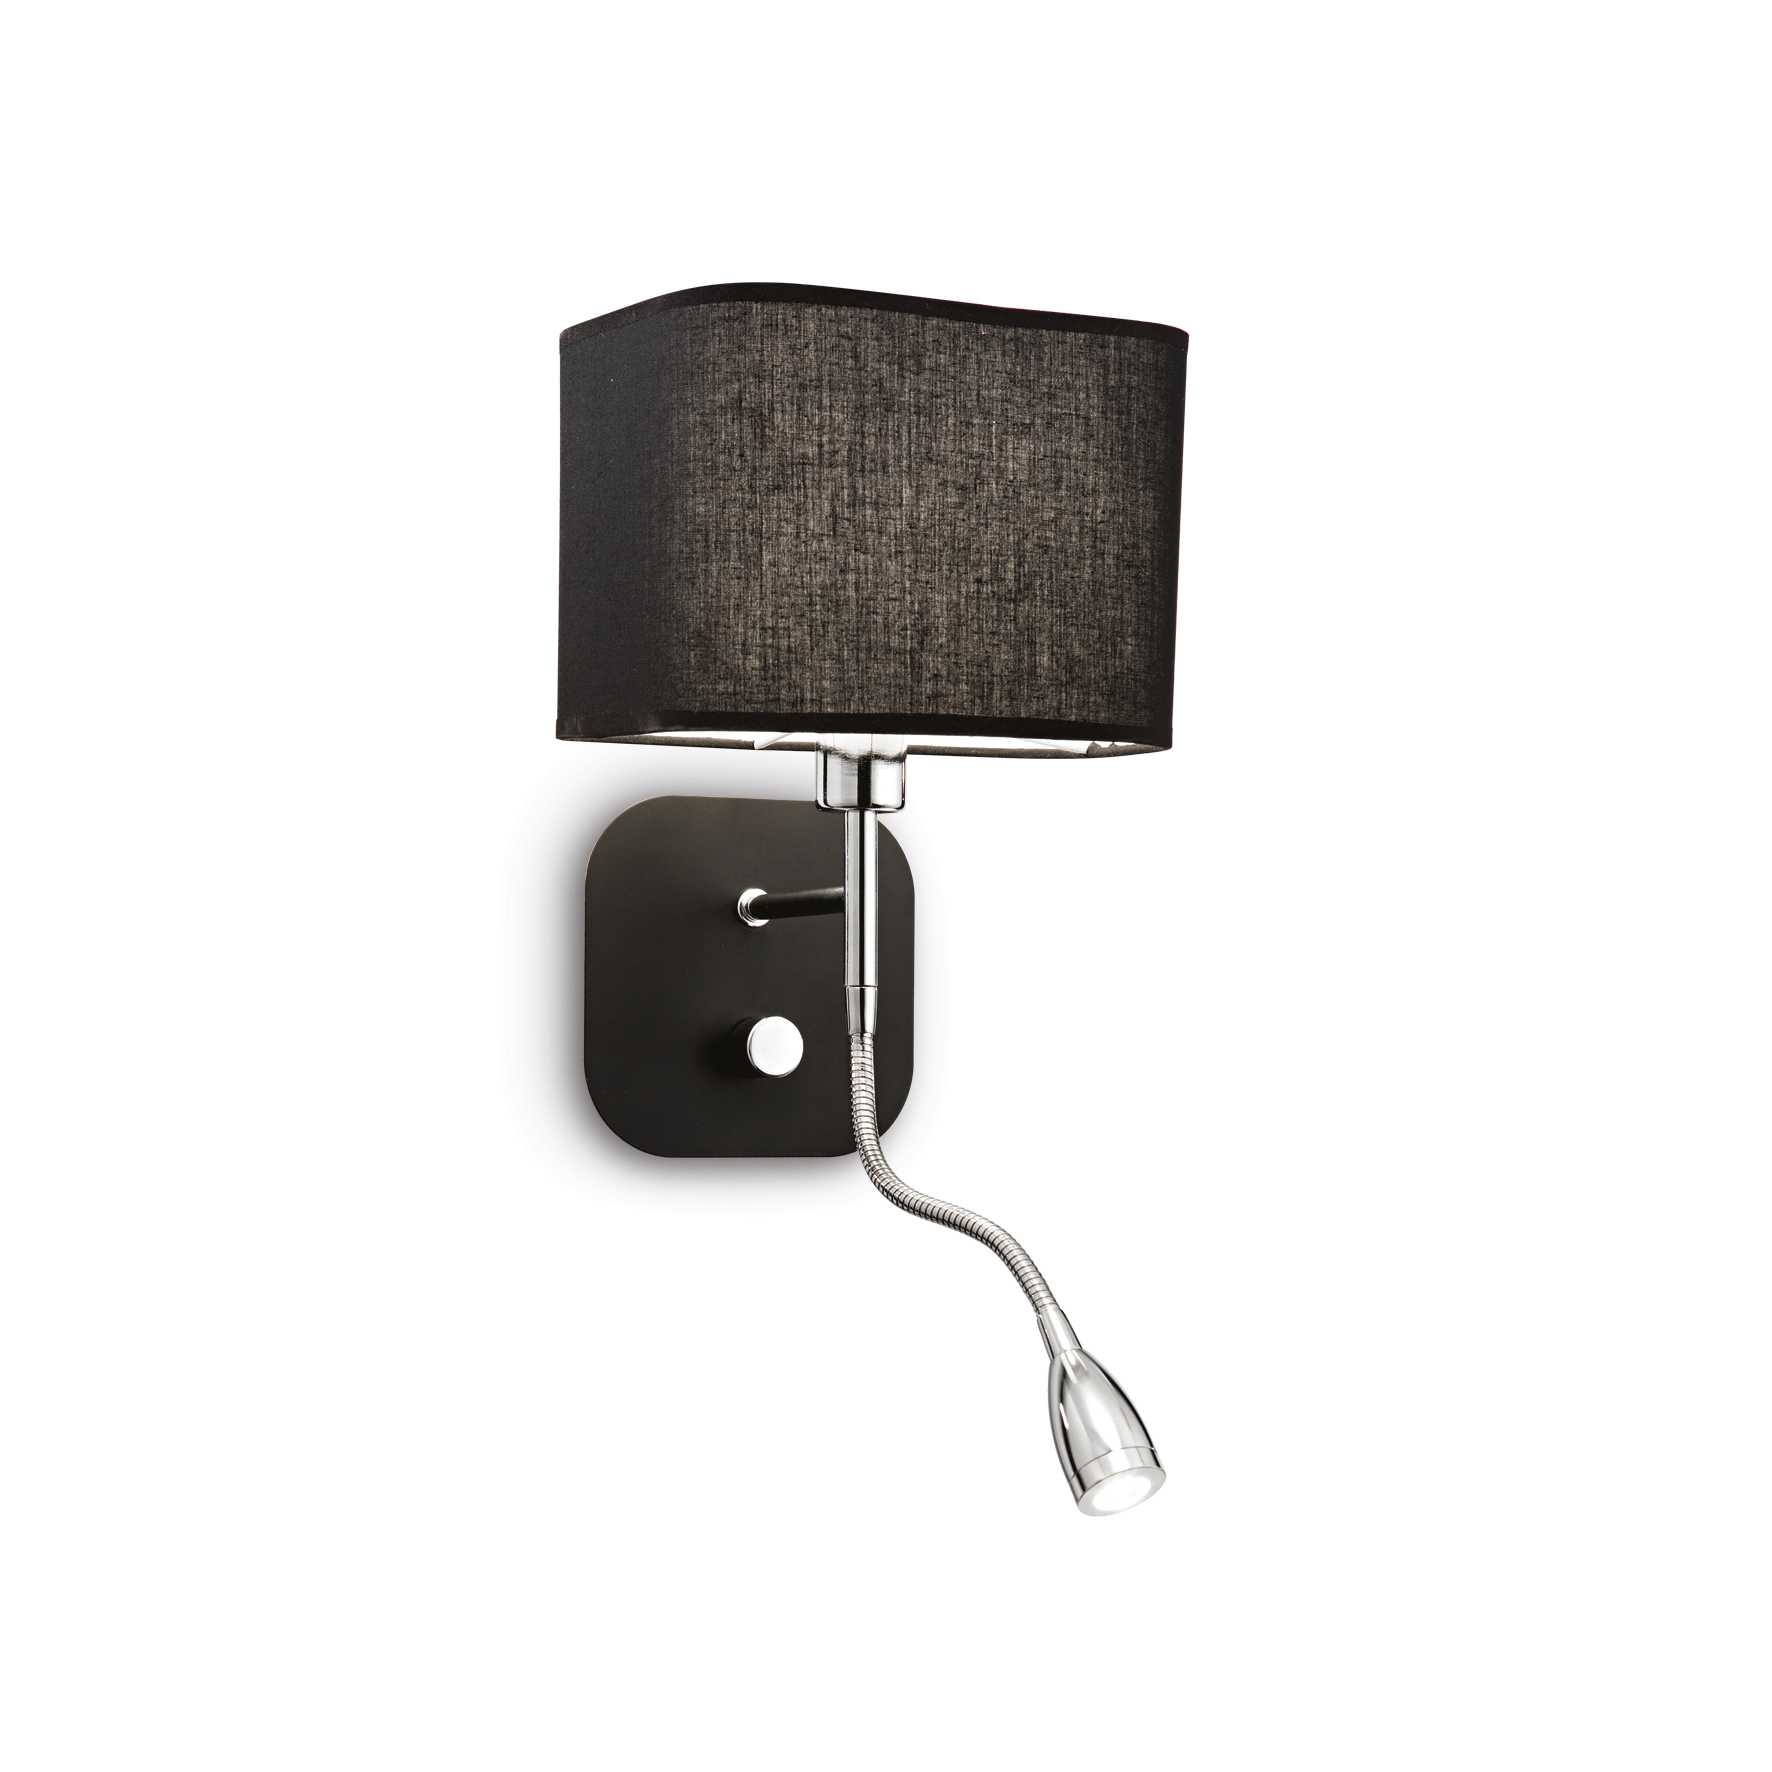 AD hotelska oprema Zidna lampa Holiday ap2- Crne boje slika proizvoda